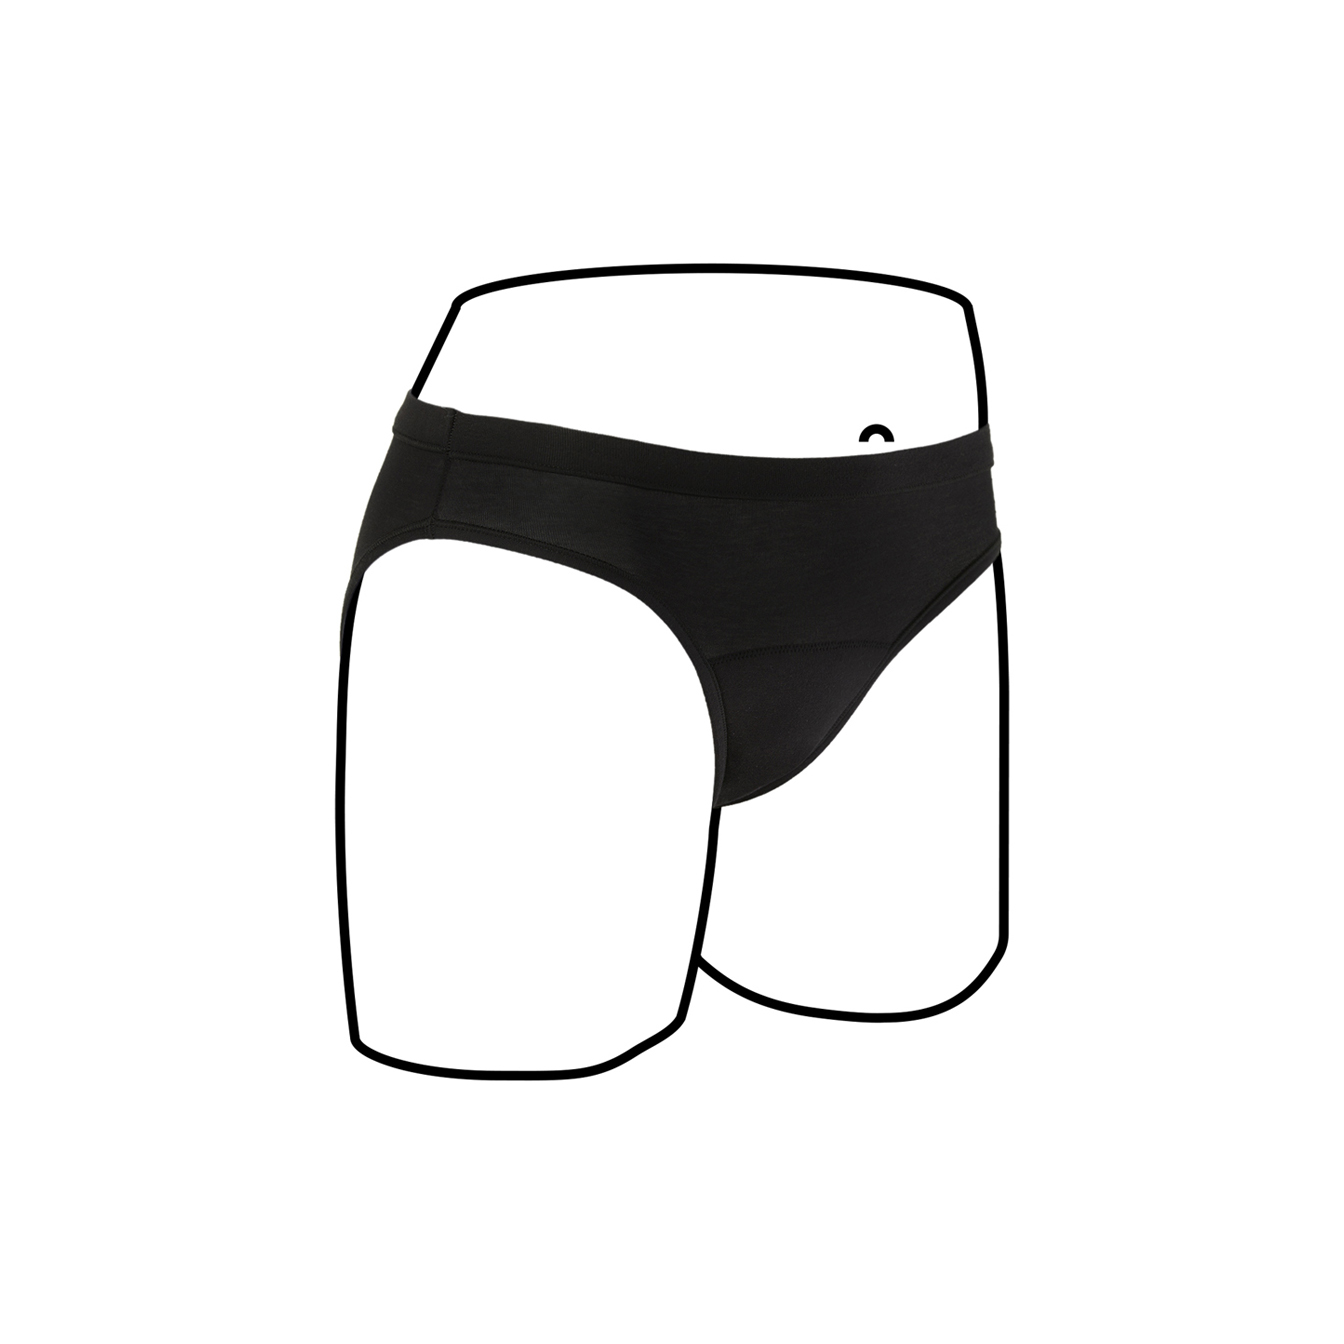 Thinx Teen's 3pc Party Combo Briefs Period Underwear - Black/Gray/Blue 9/10